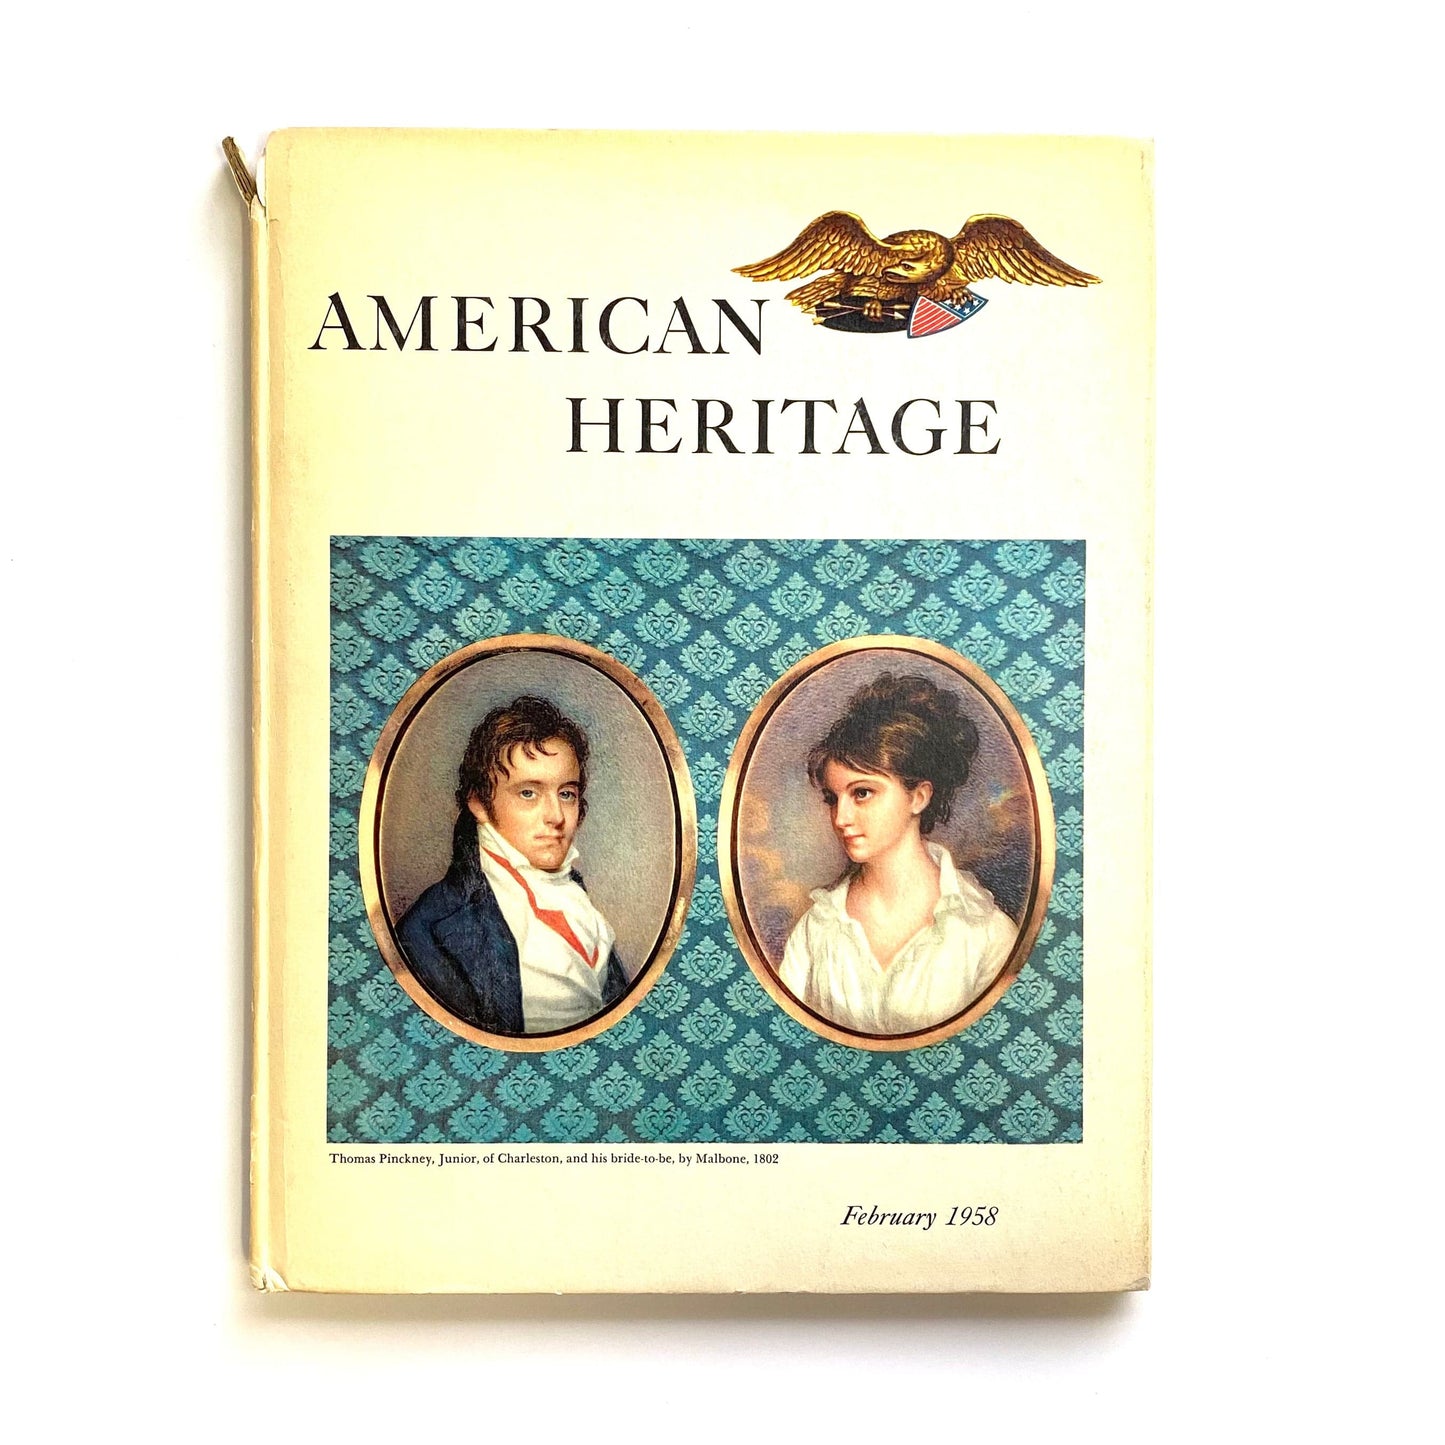 Vintage American Heritage Volume IX No 2 February 1958 Hardcover History Book